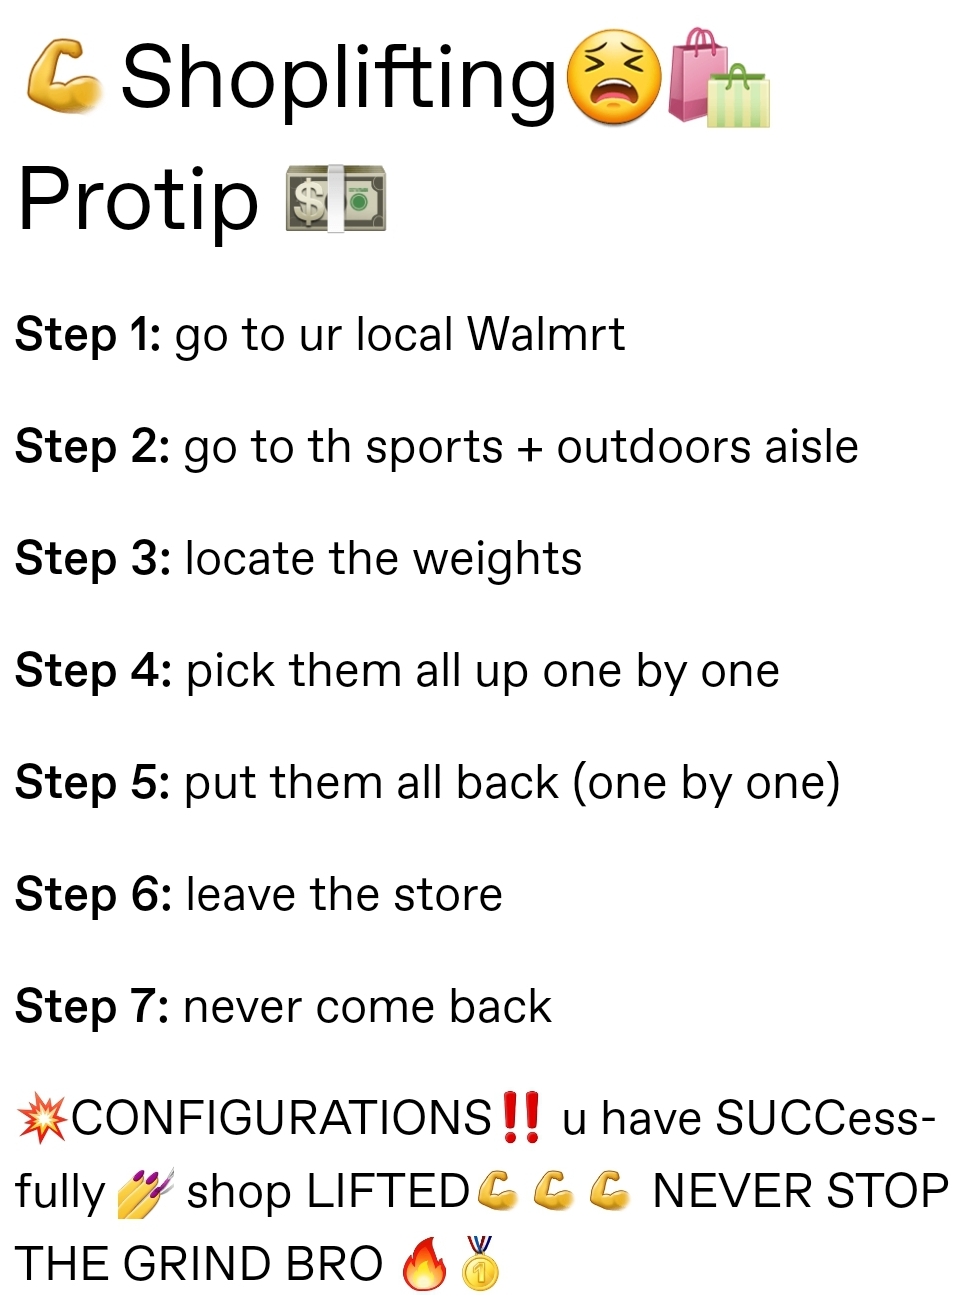 Do you even shoplift?